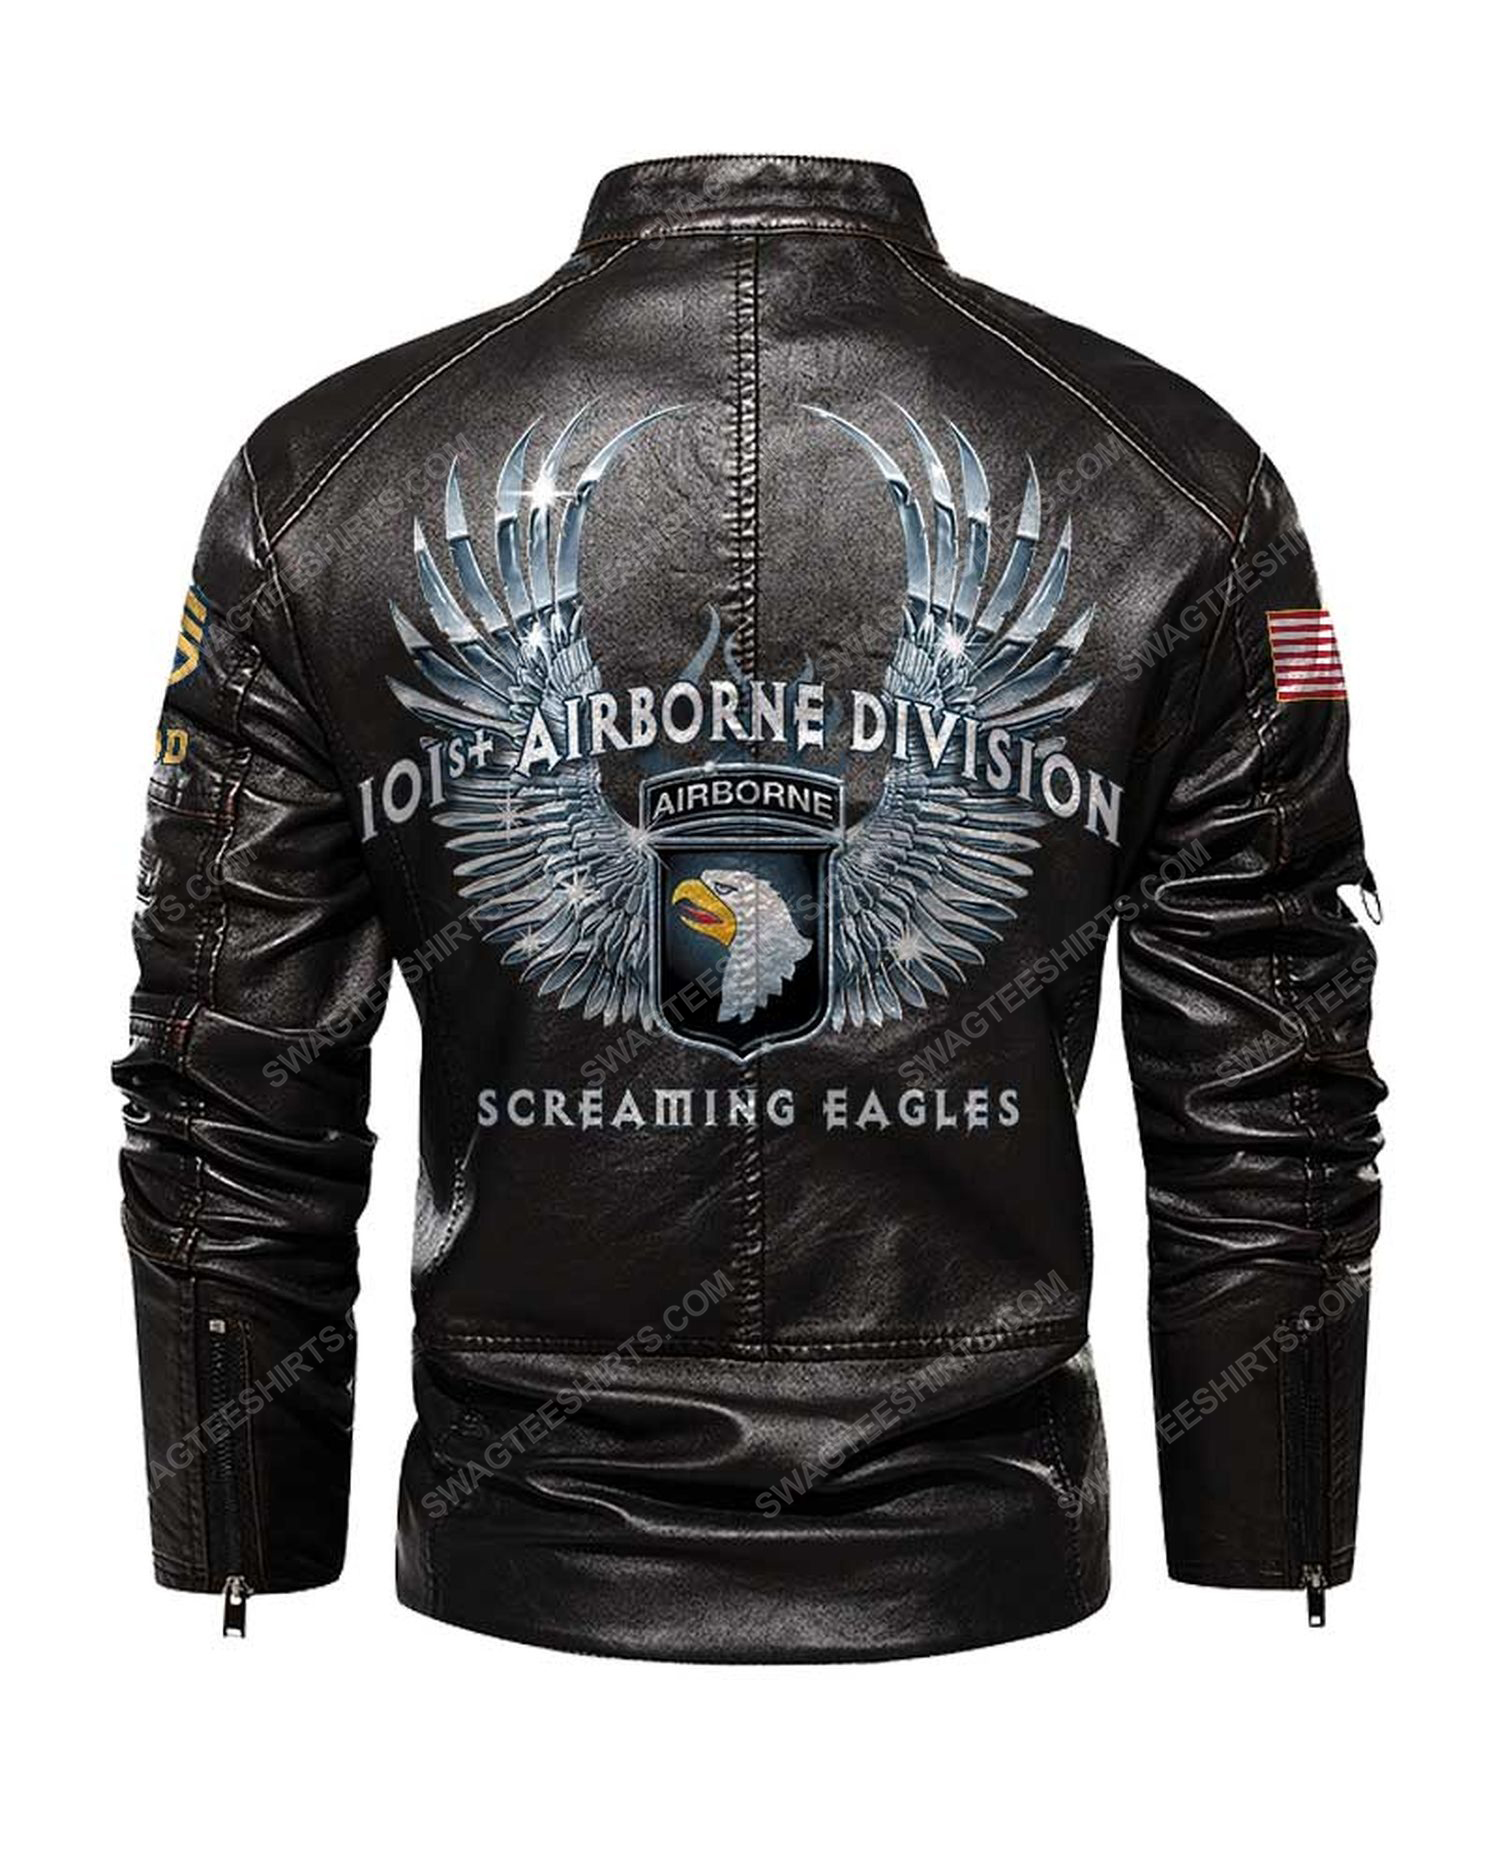 Custom 101st airborne division screaming eagles moto leather jacket - black